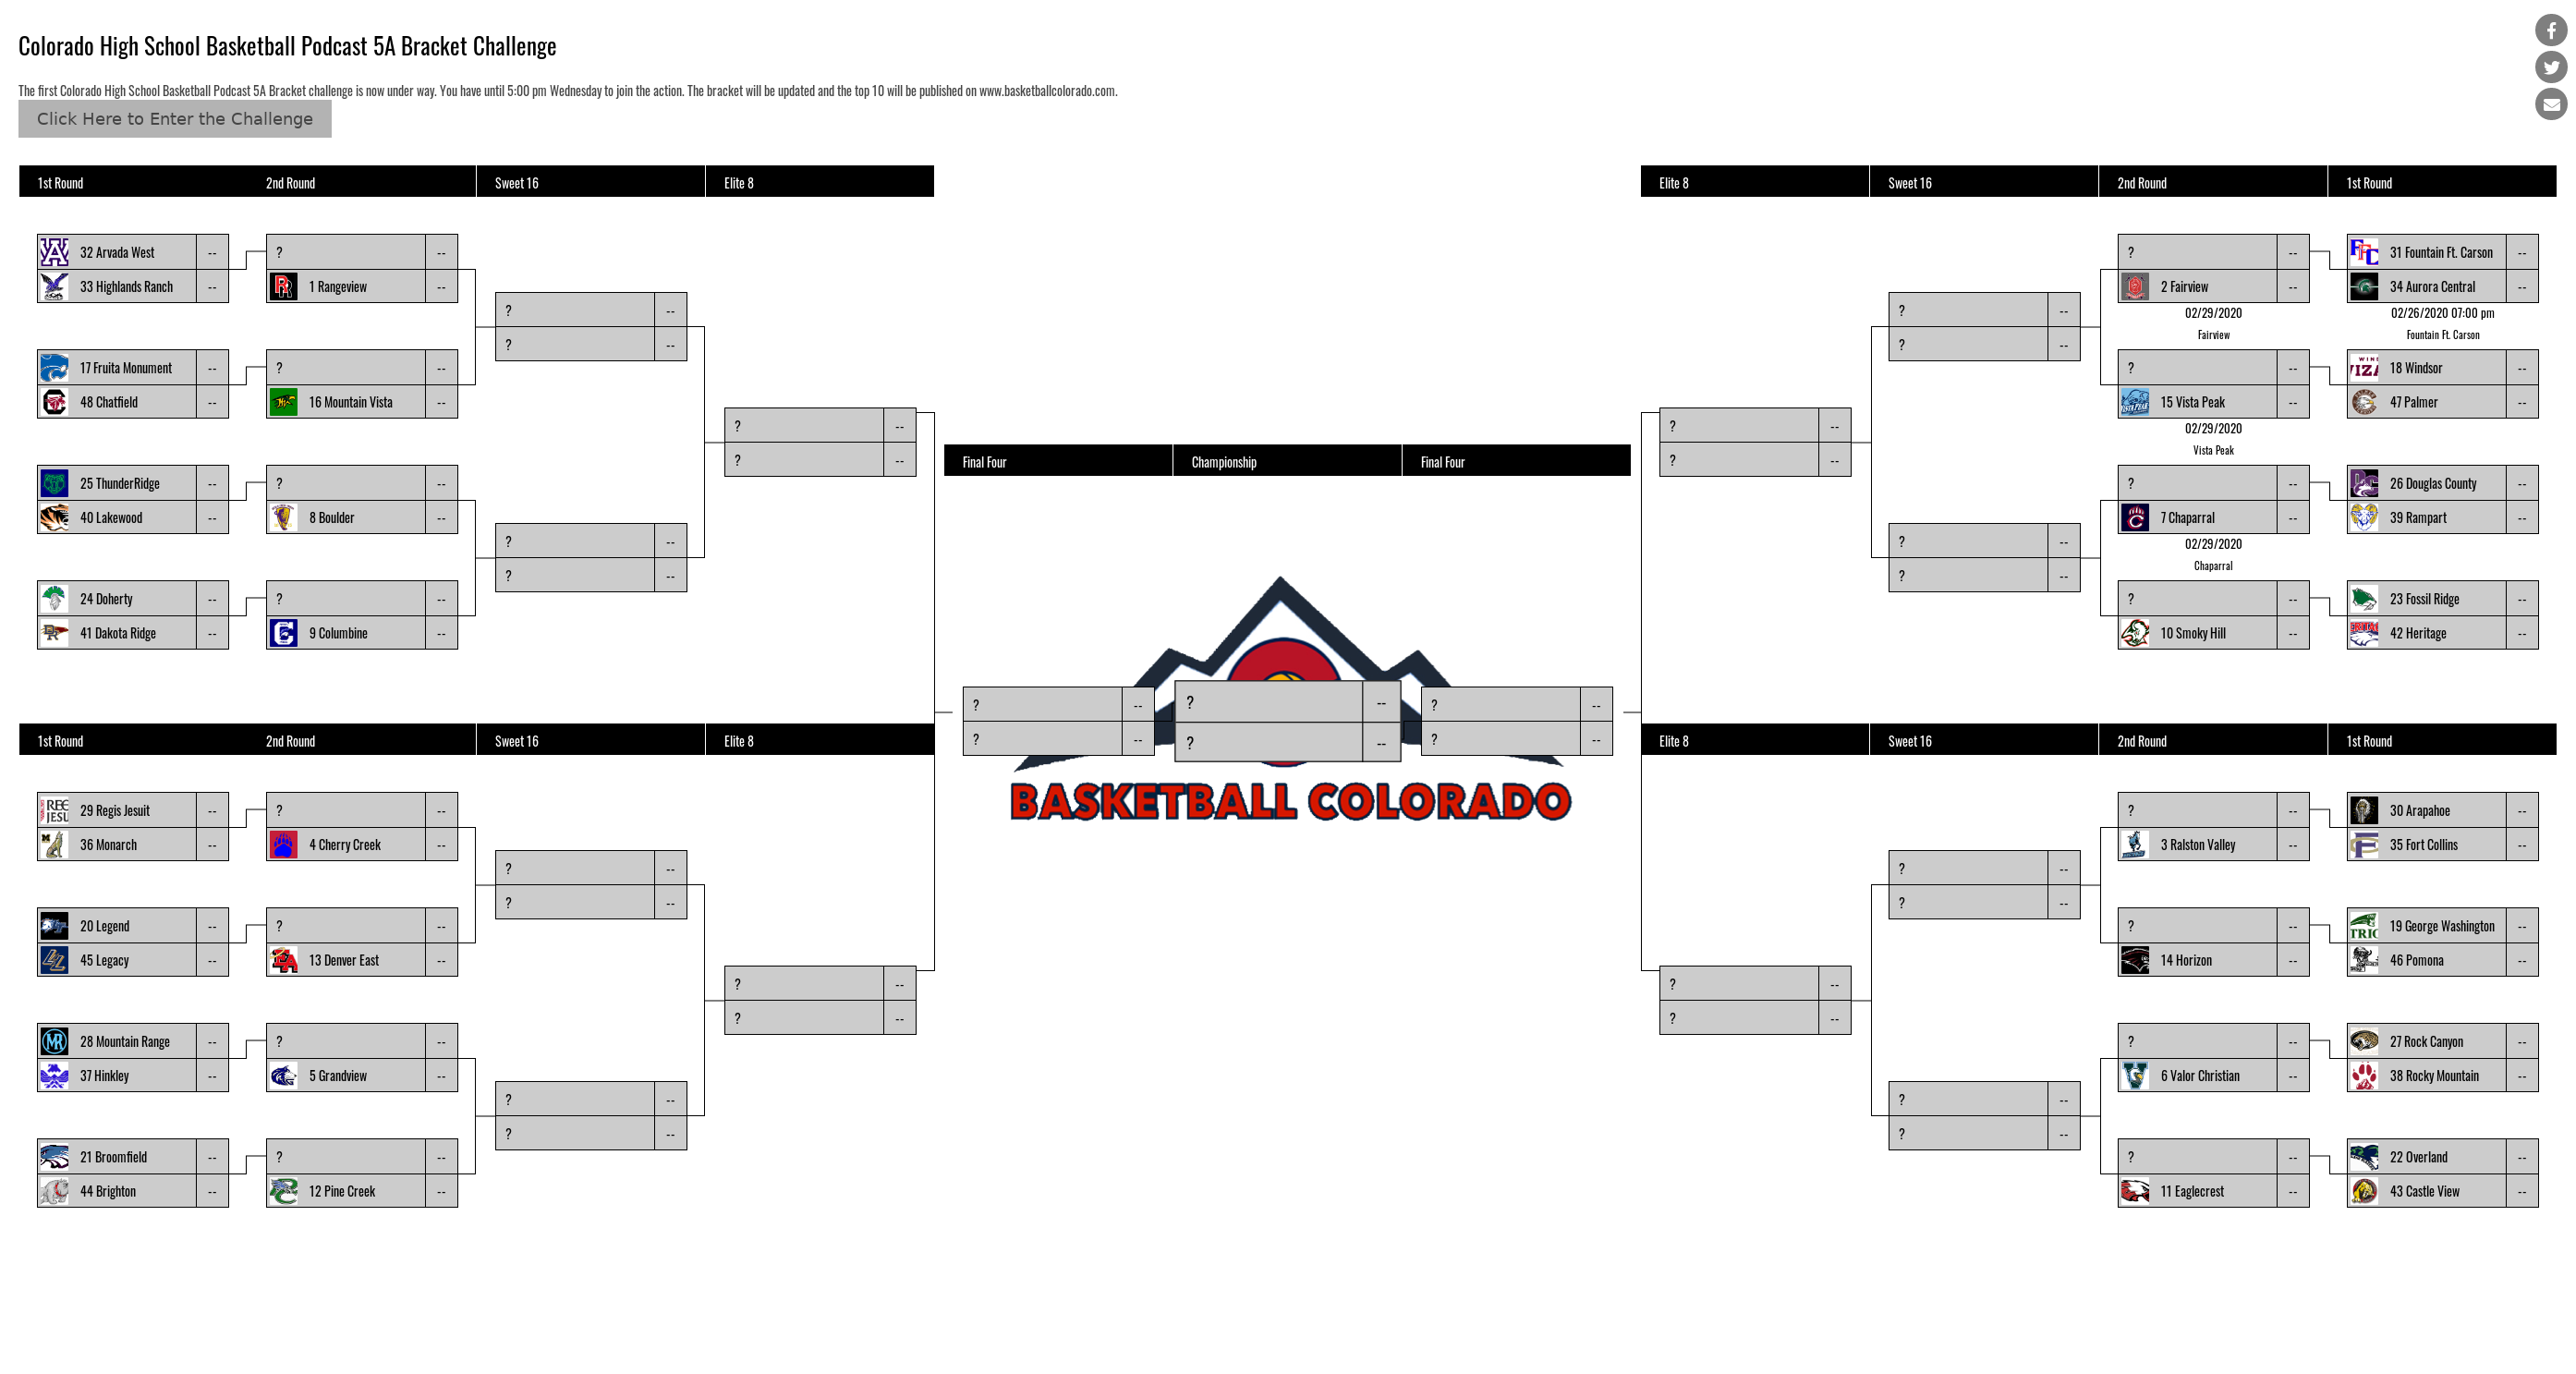 Colorado High School Basketball Podcast Bracket Challenge Standings 2